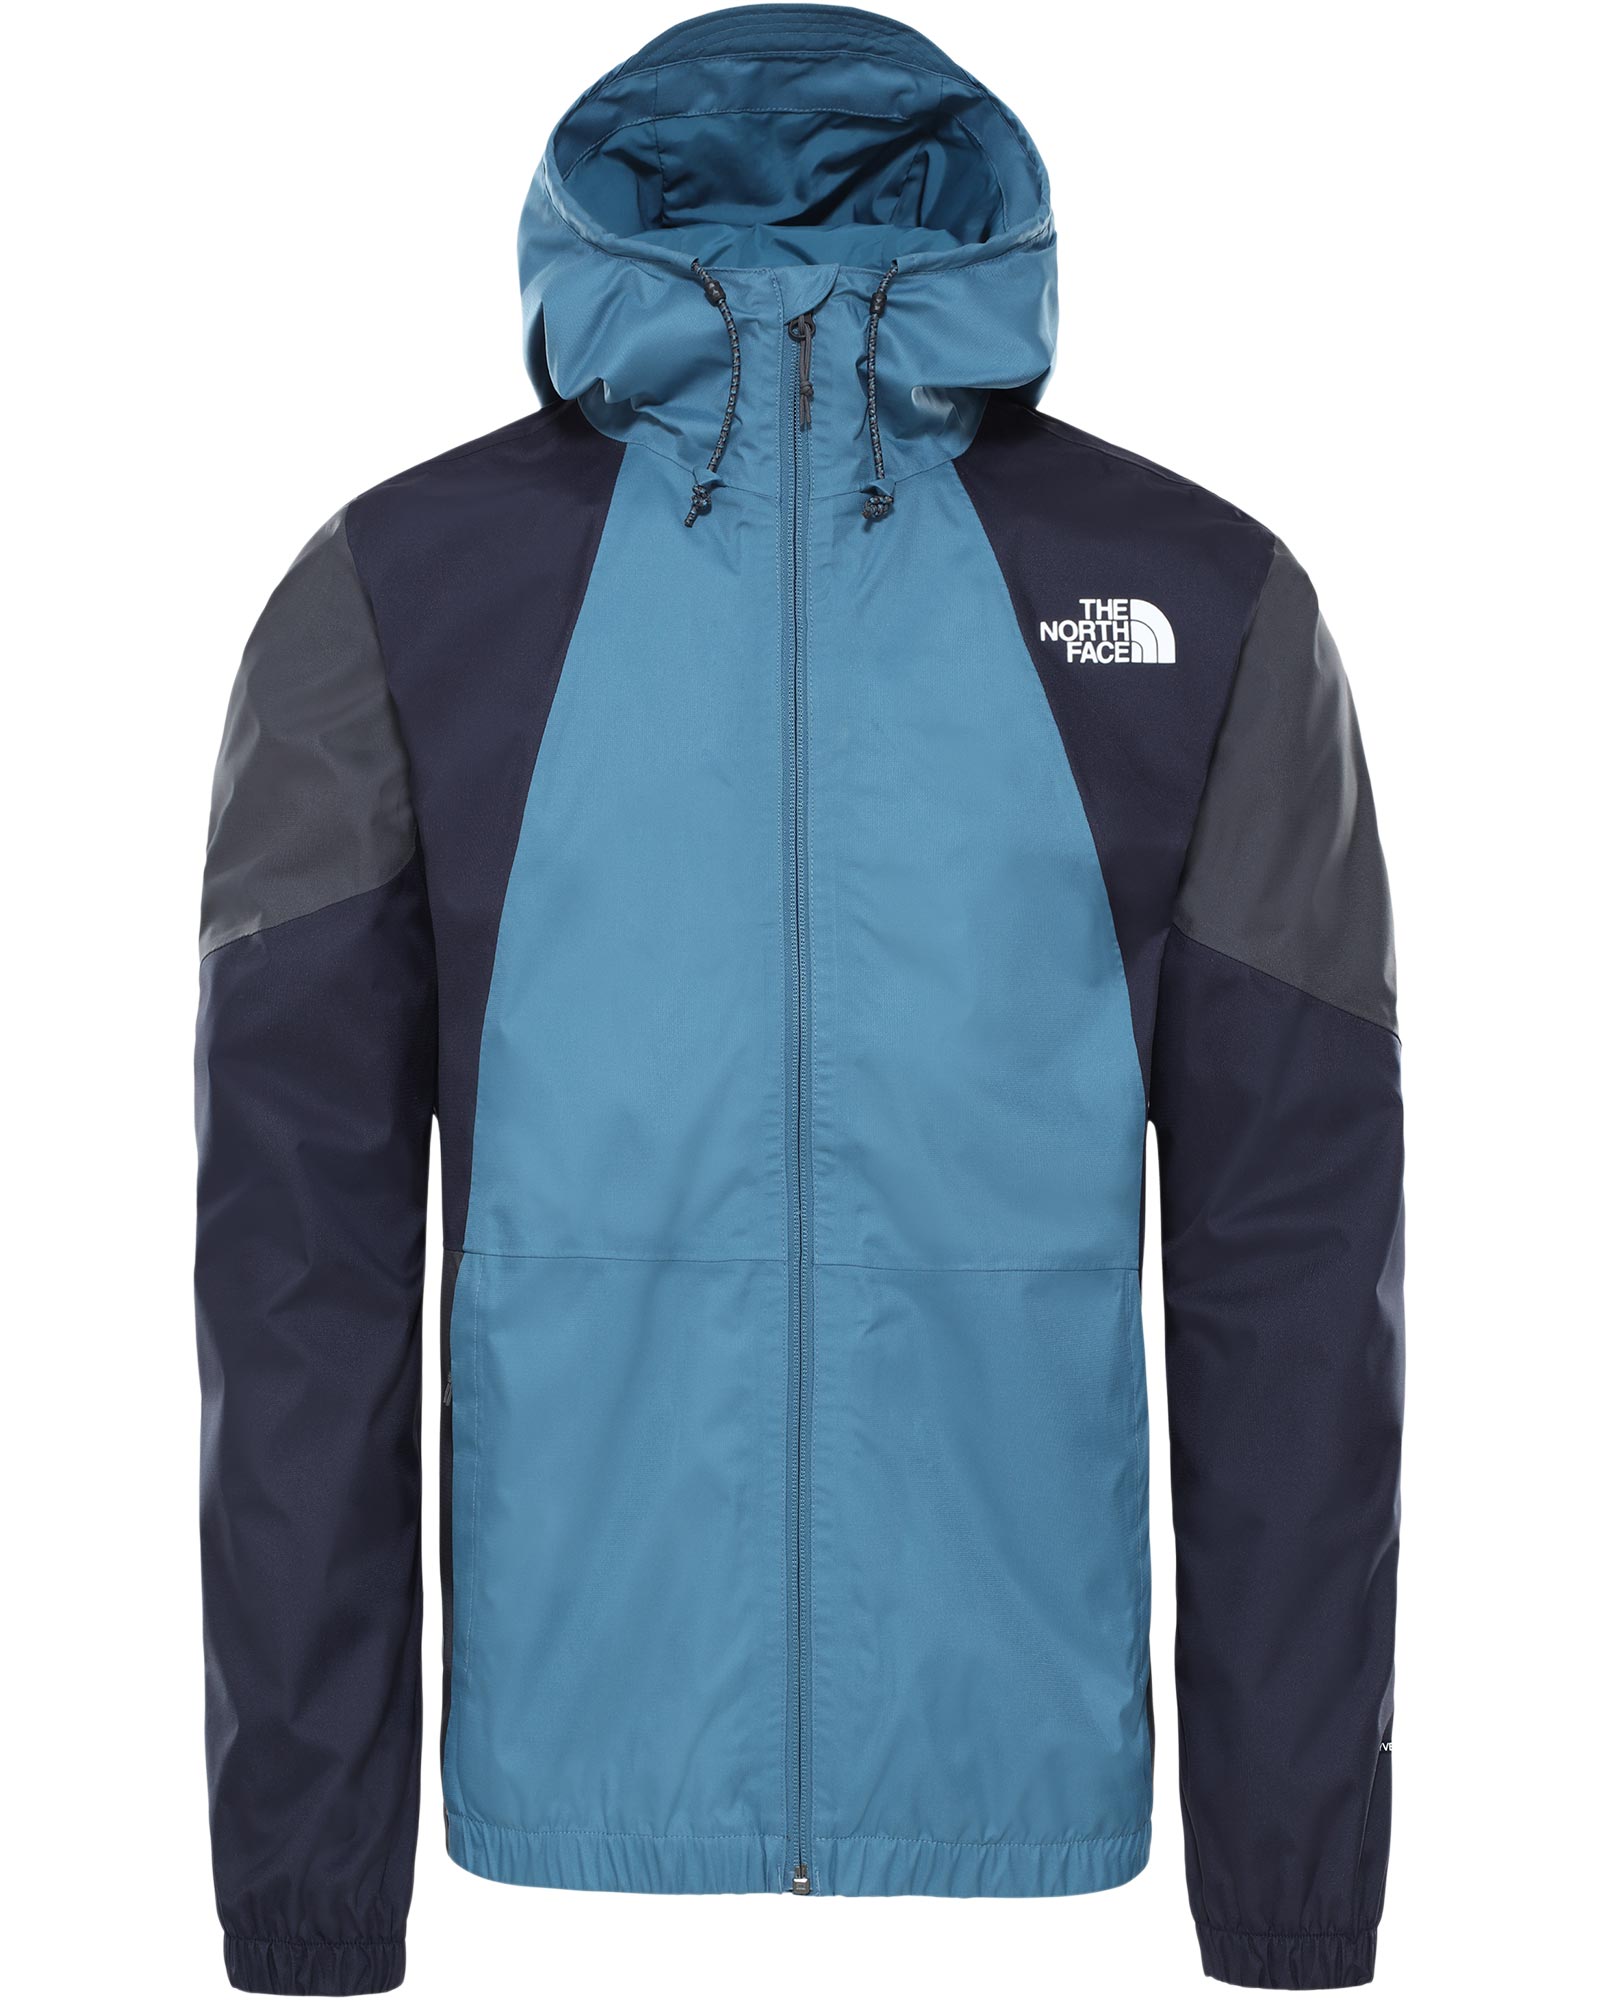 The North Face Farside Men’s Jacket - Mallard Blue XL